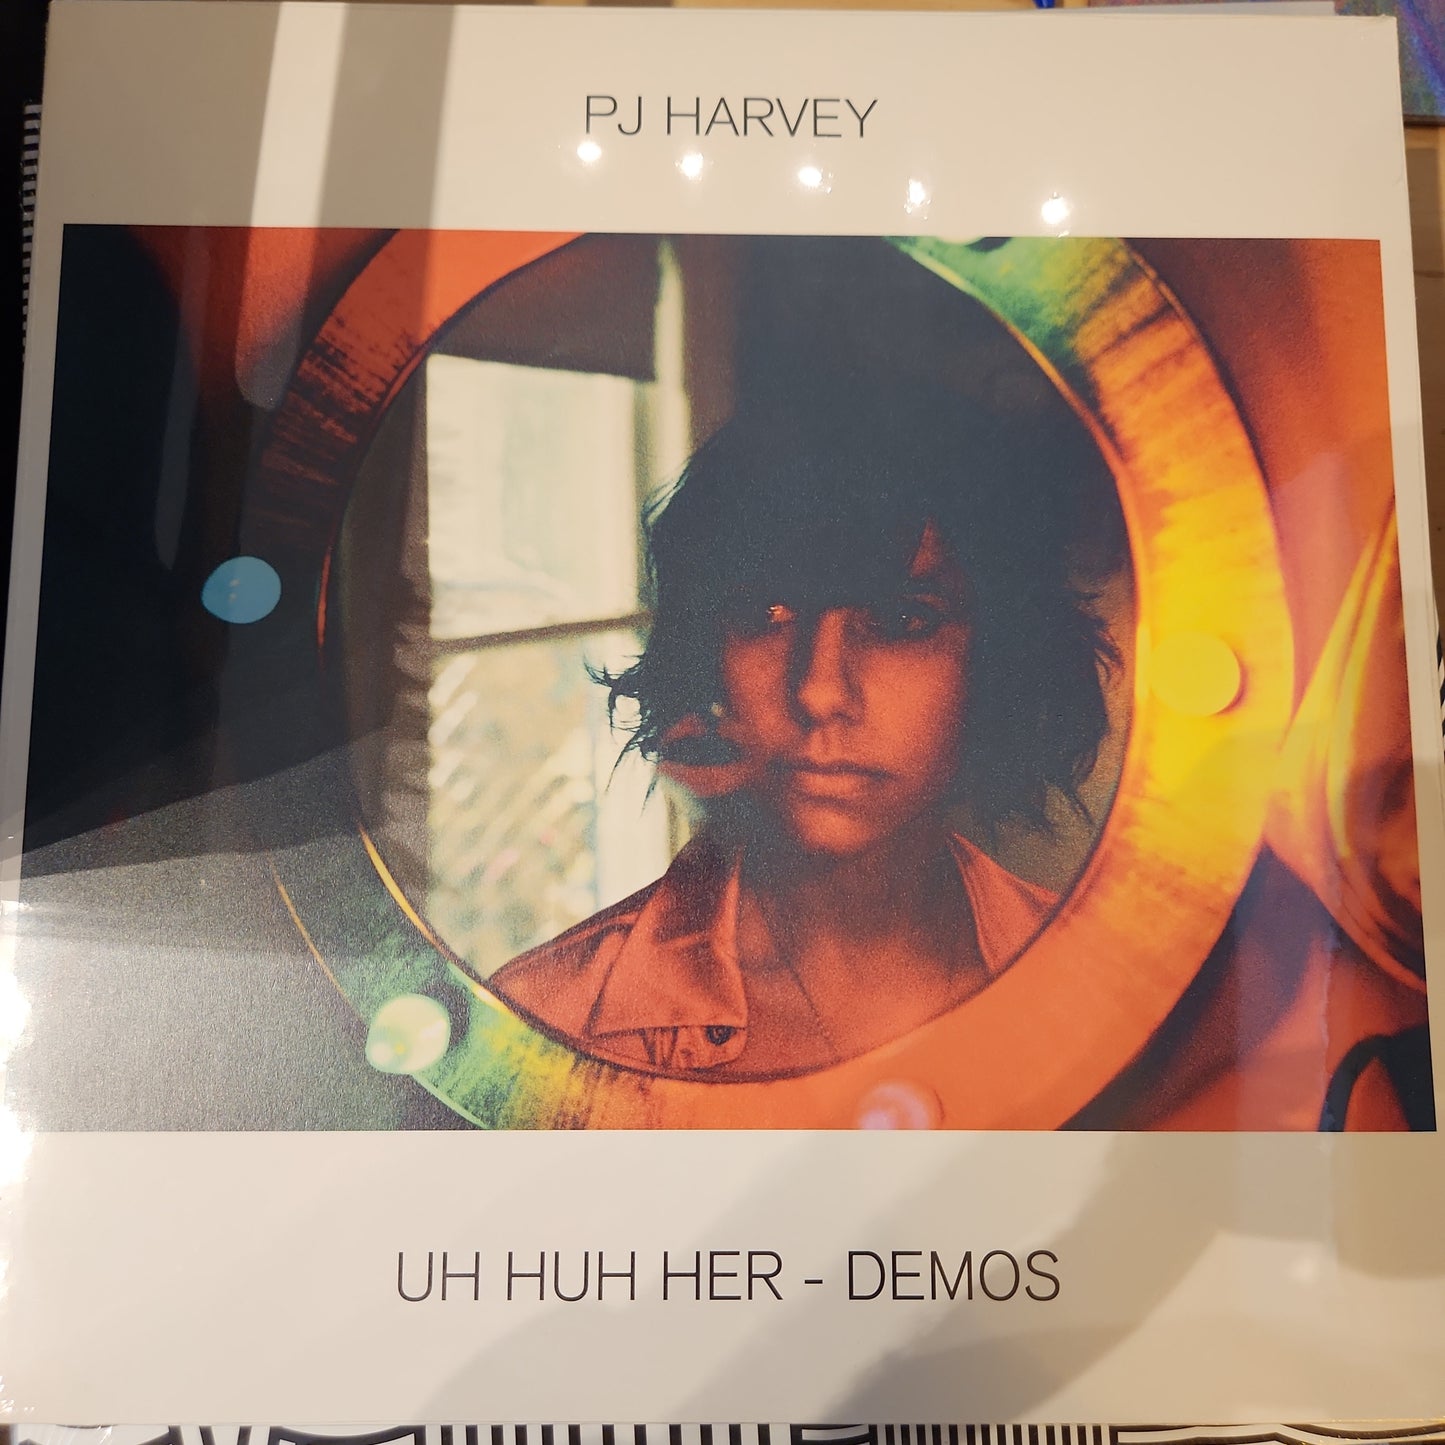 PJ Harvey - Uh Huh Her (demos) - Vinyl LP